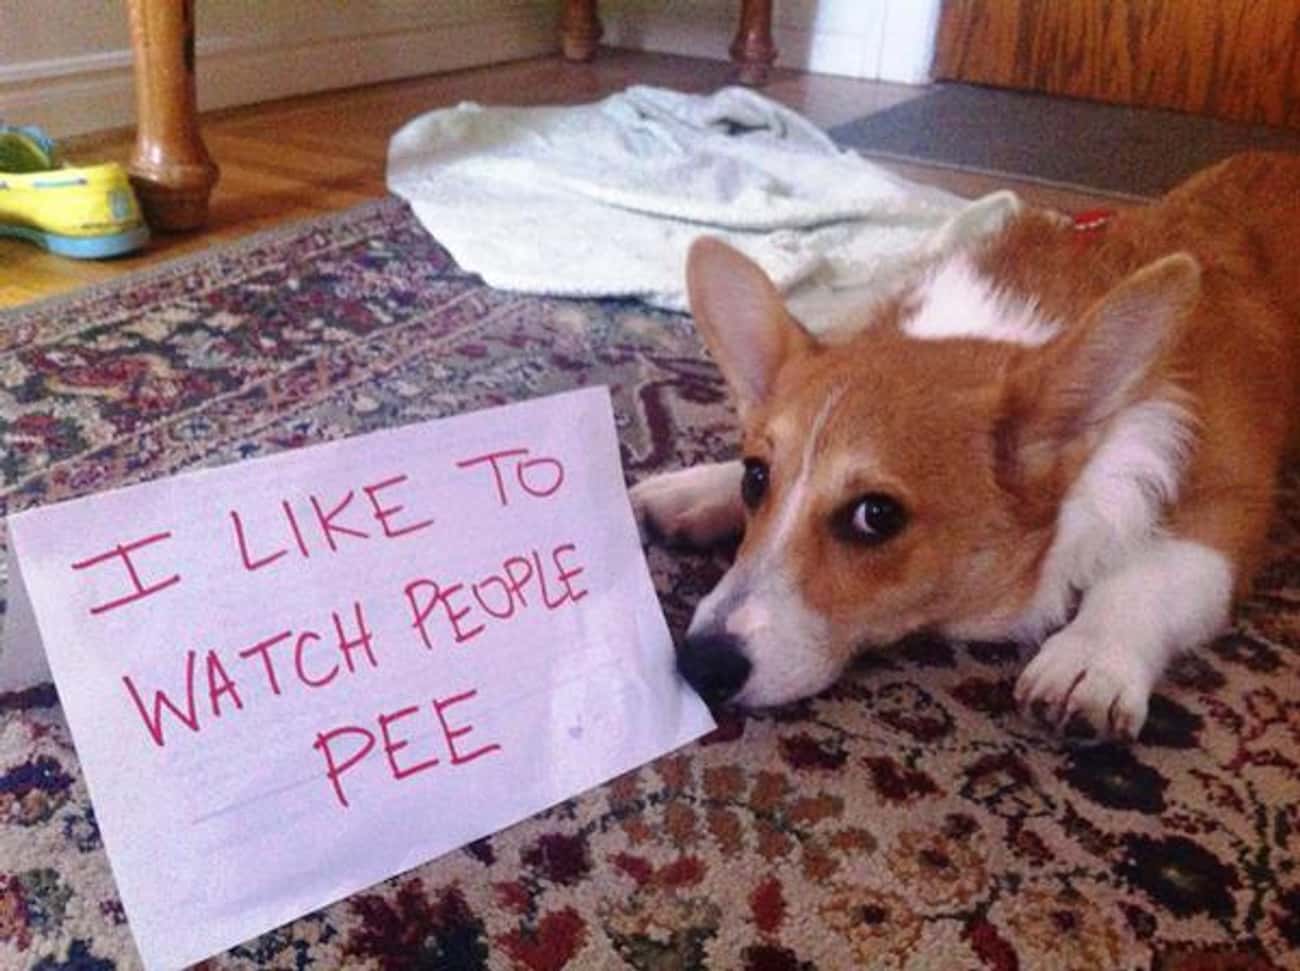 'I Like To Watch People Pee'